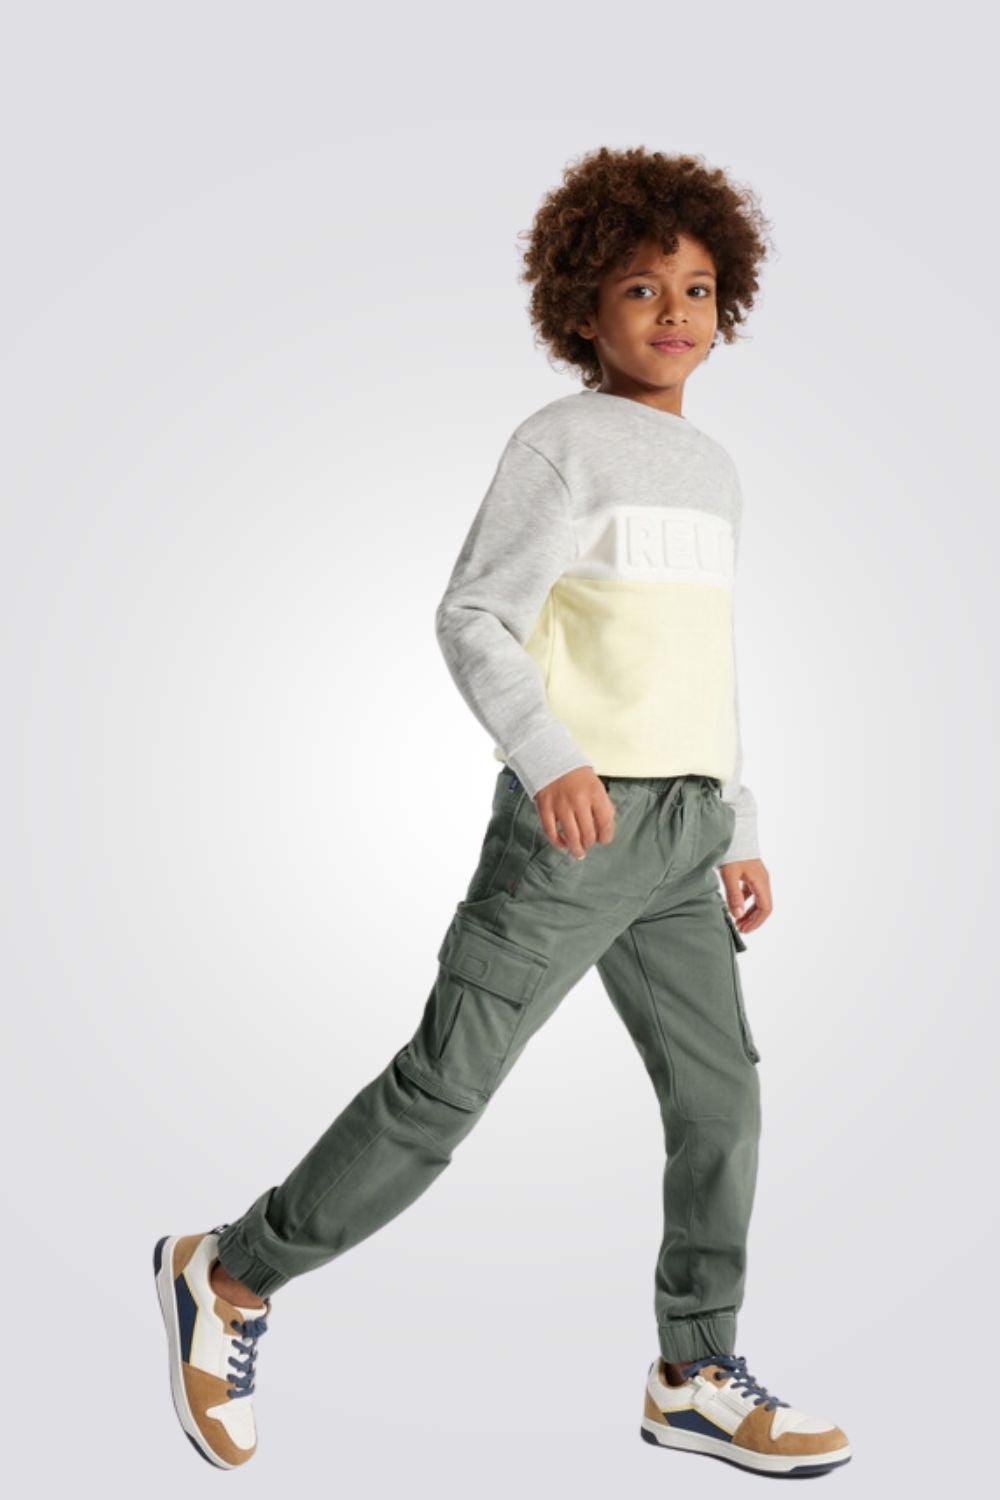 OKAIDI - מכנסיים ארוכים לילדים בצבע ירוק זית - MASHBIR//365